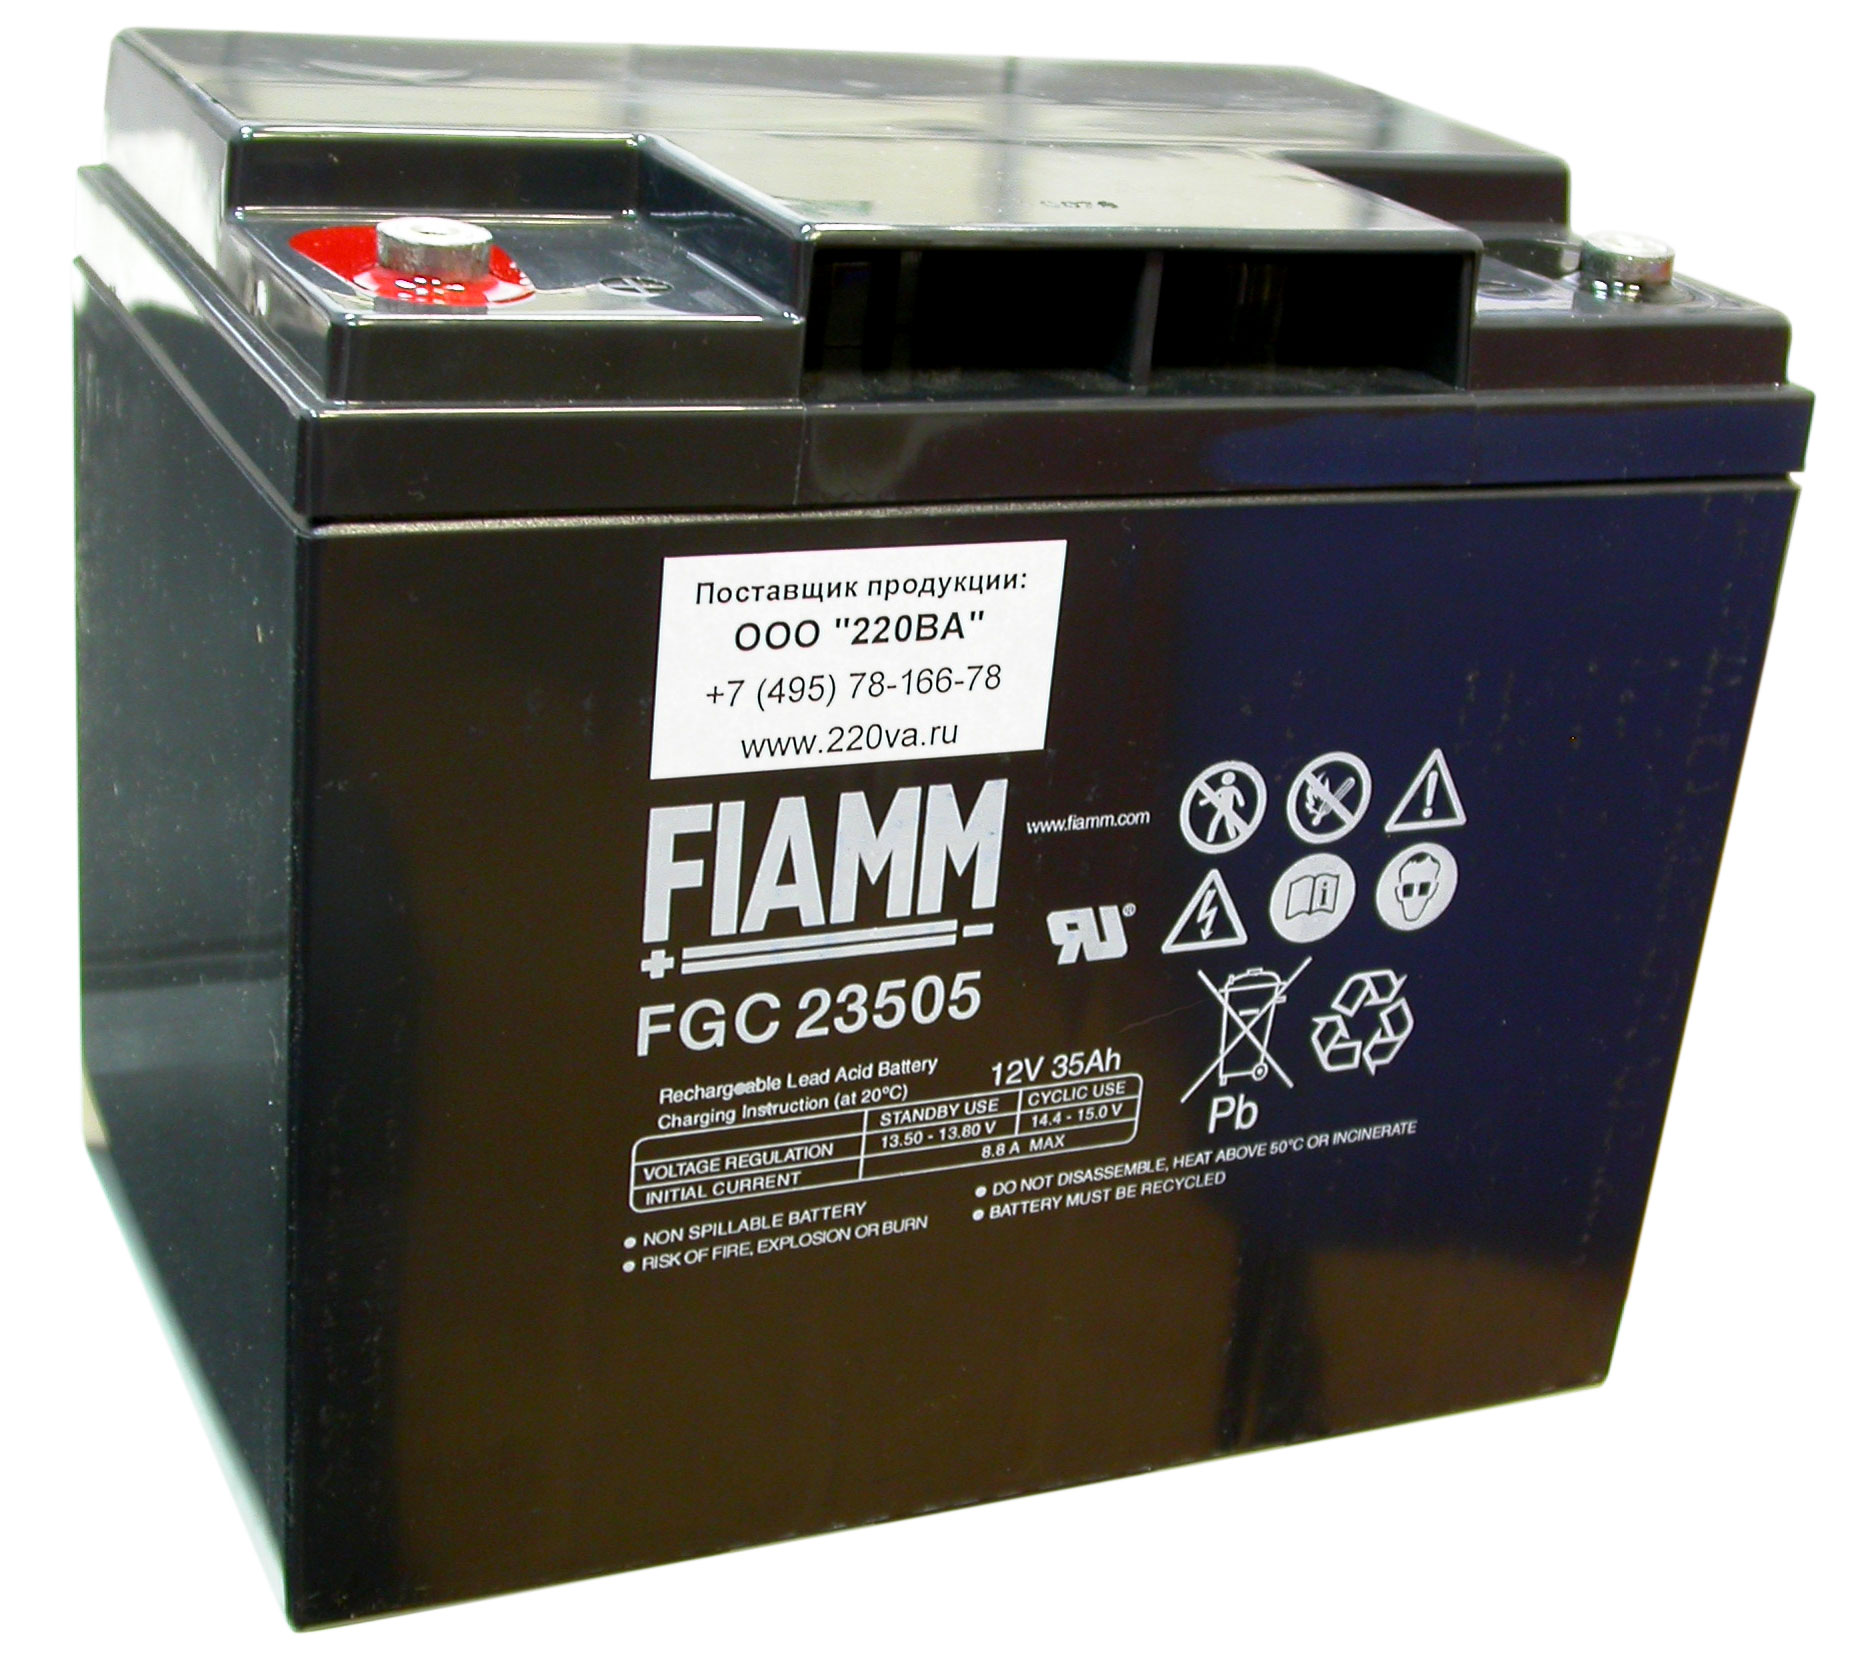 باتری فیام FGC AGM cyclic application years design